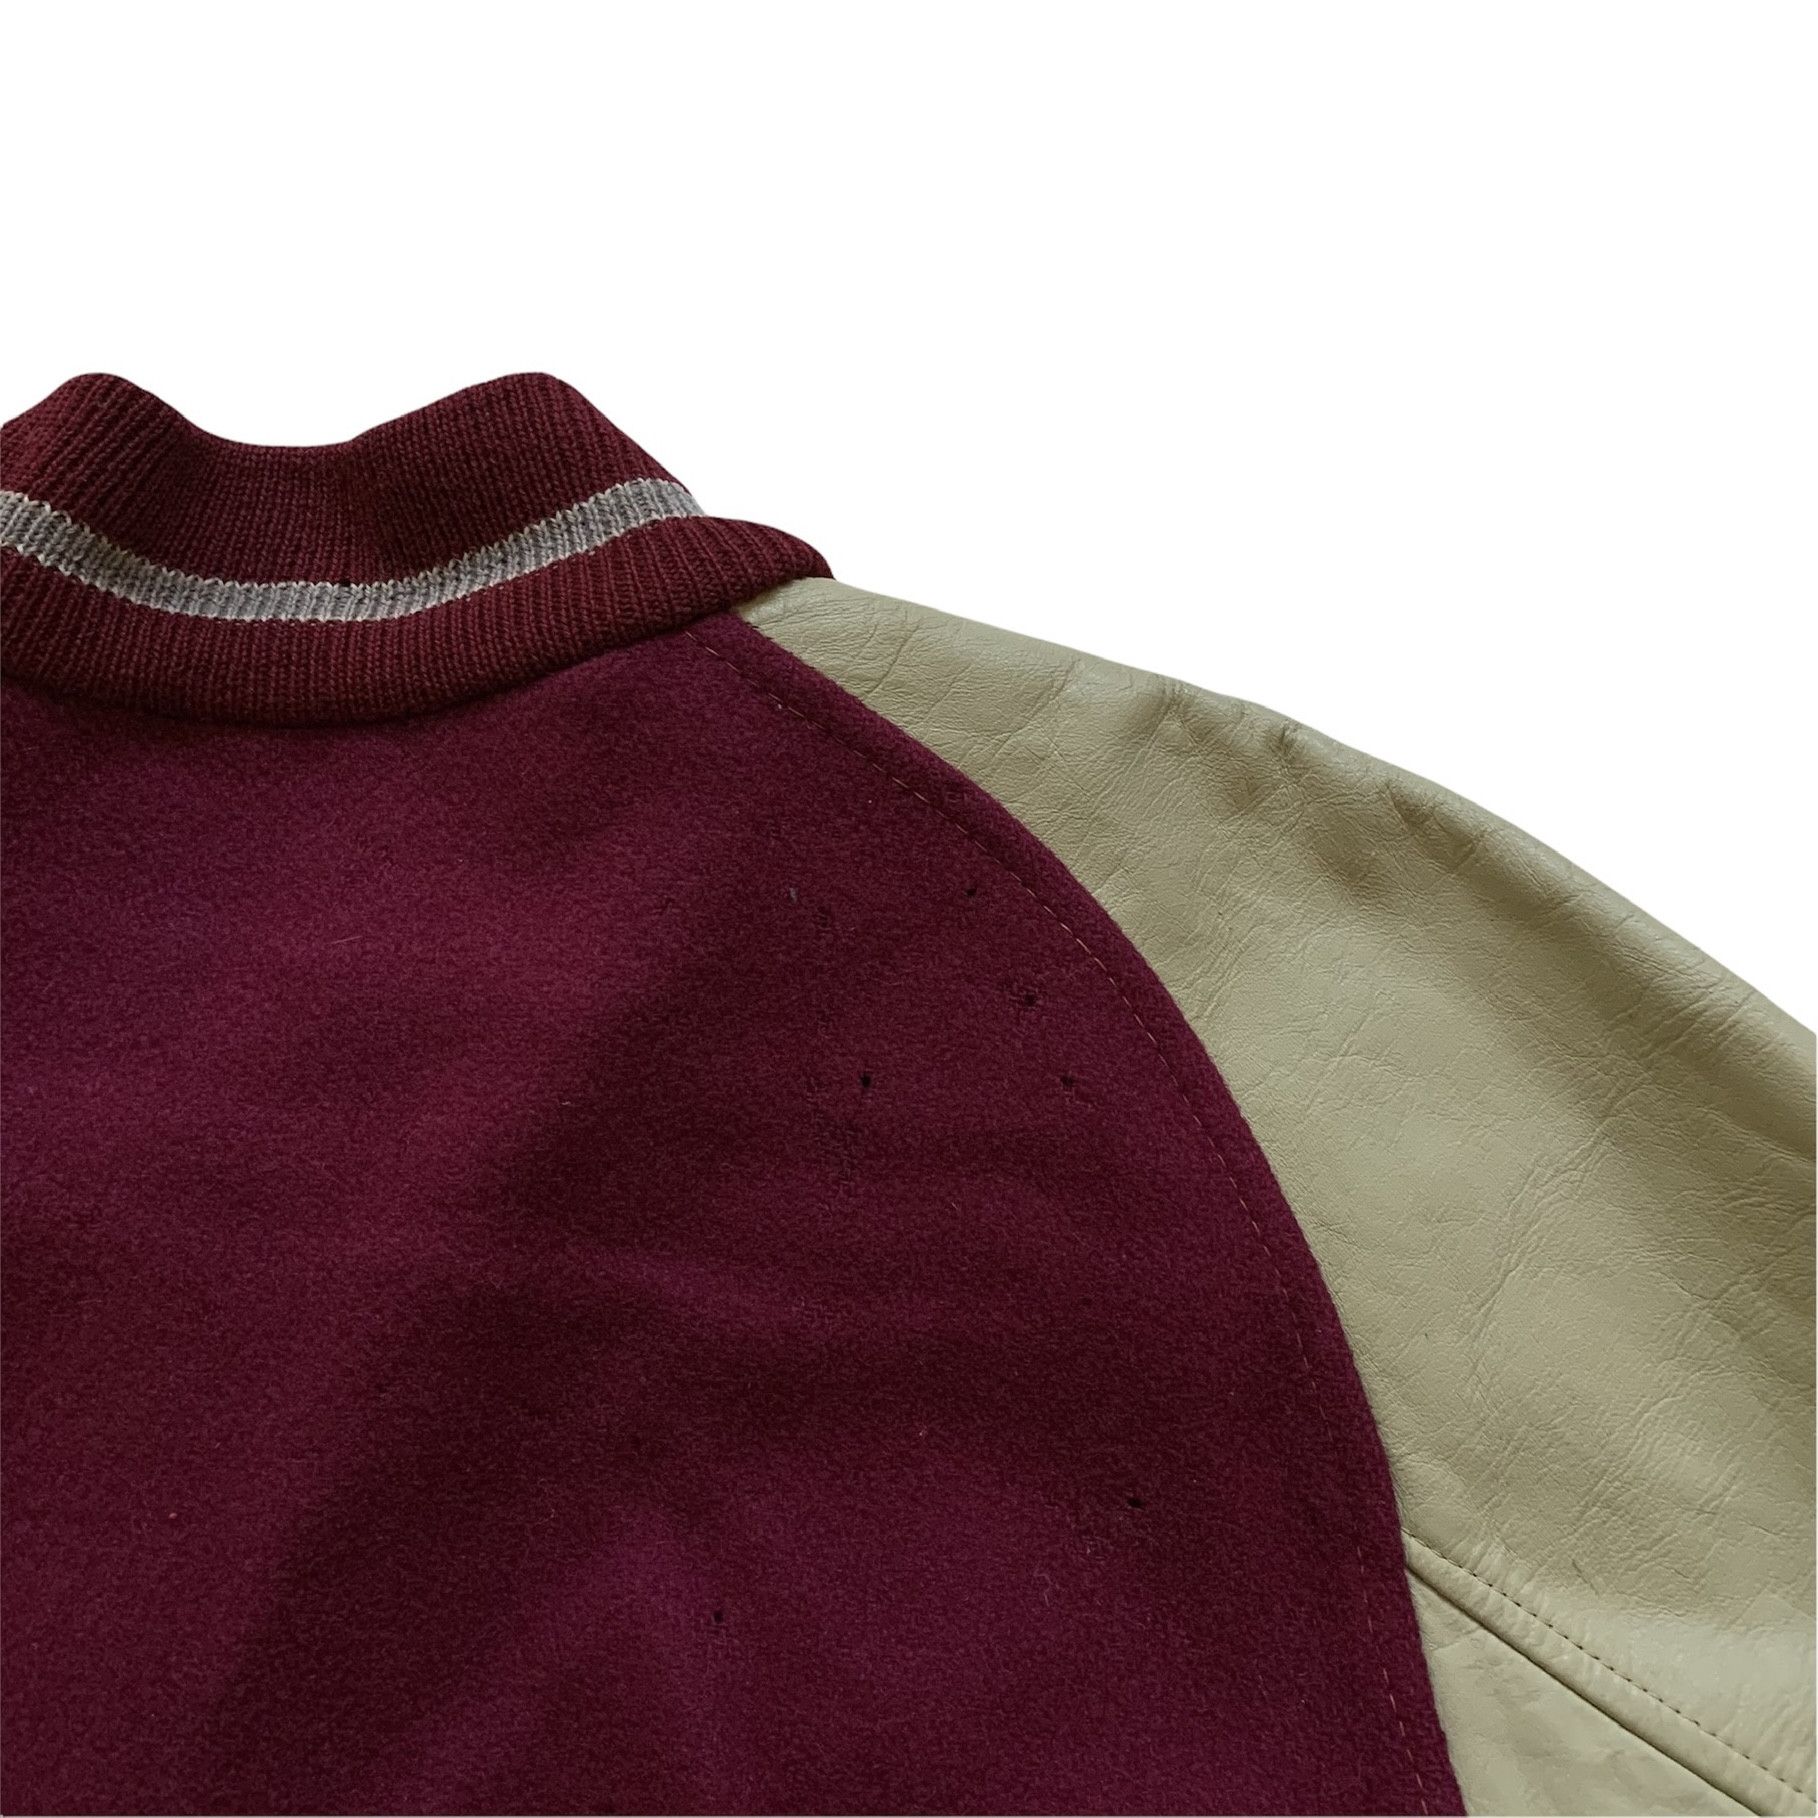 Vintage Vintage 60s IN Burgundy Wool Leather Varsity Jacket Medium Size US M / EU 48-50 / 2 - 6 Thumbnail